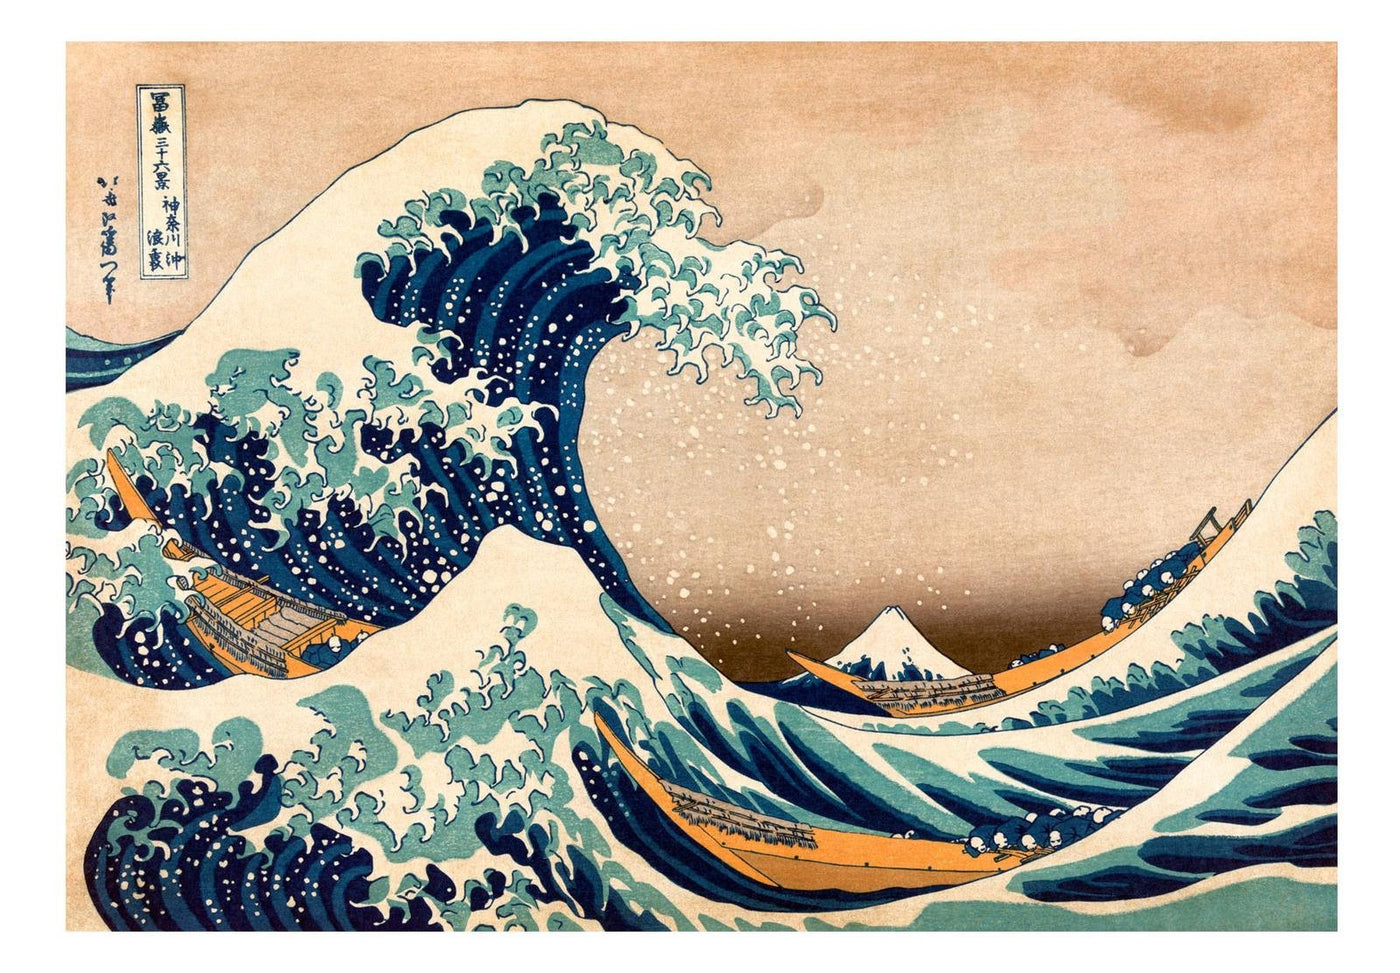 Peel and stick wall mural - Hokusai: The Great Wave off Kanagawa (Reproduction)-TipTopHomeDecor